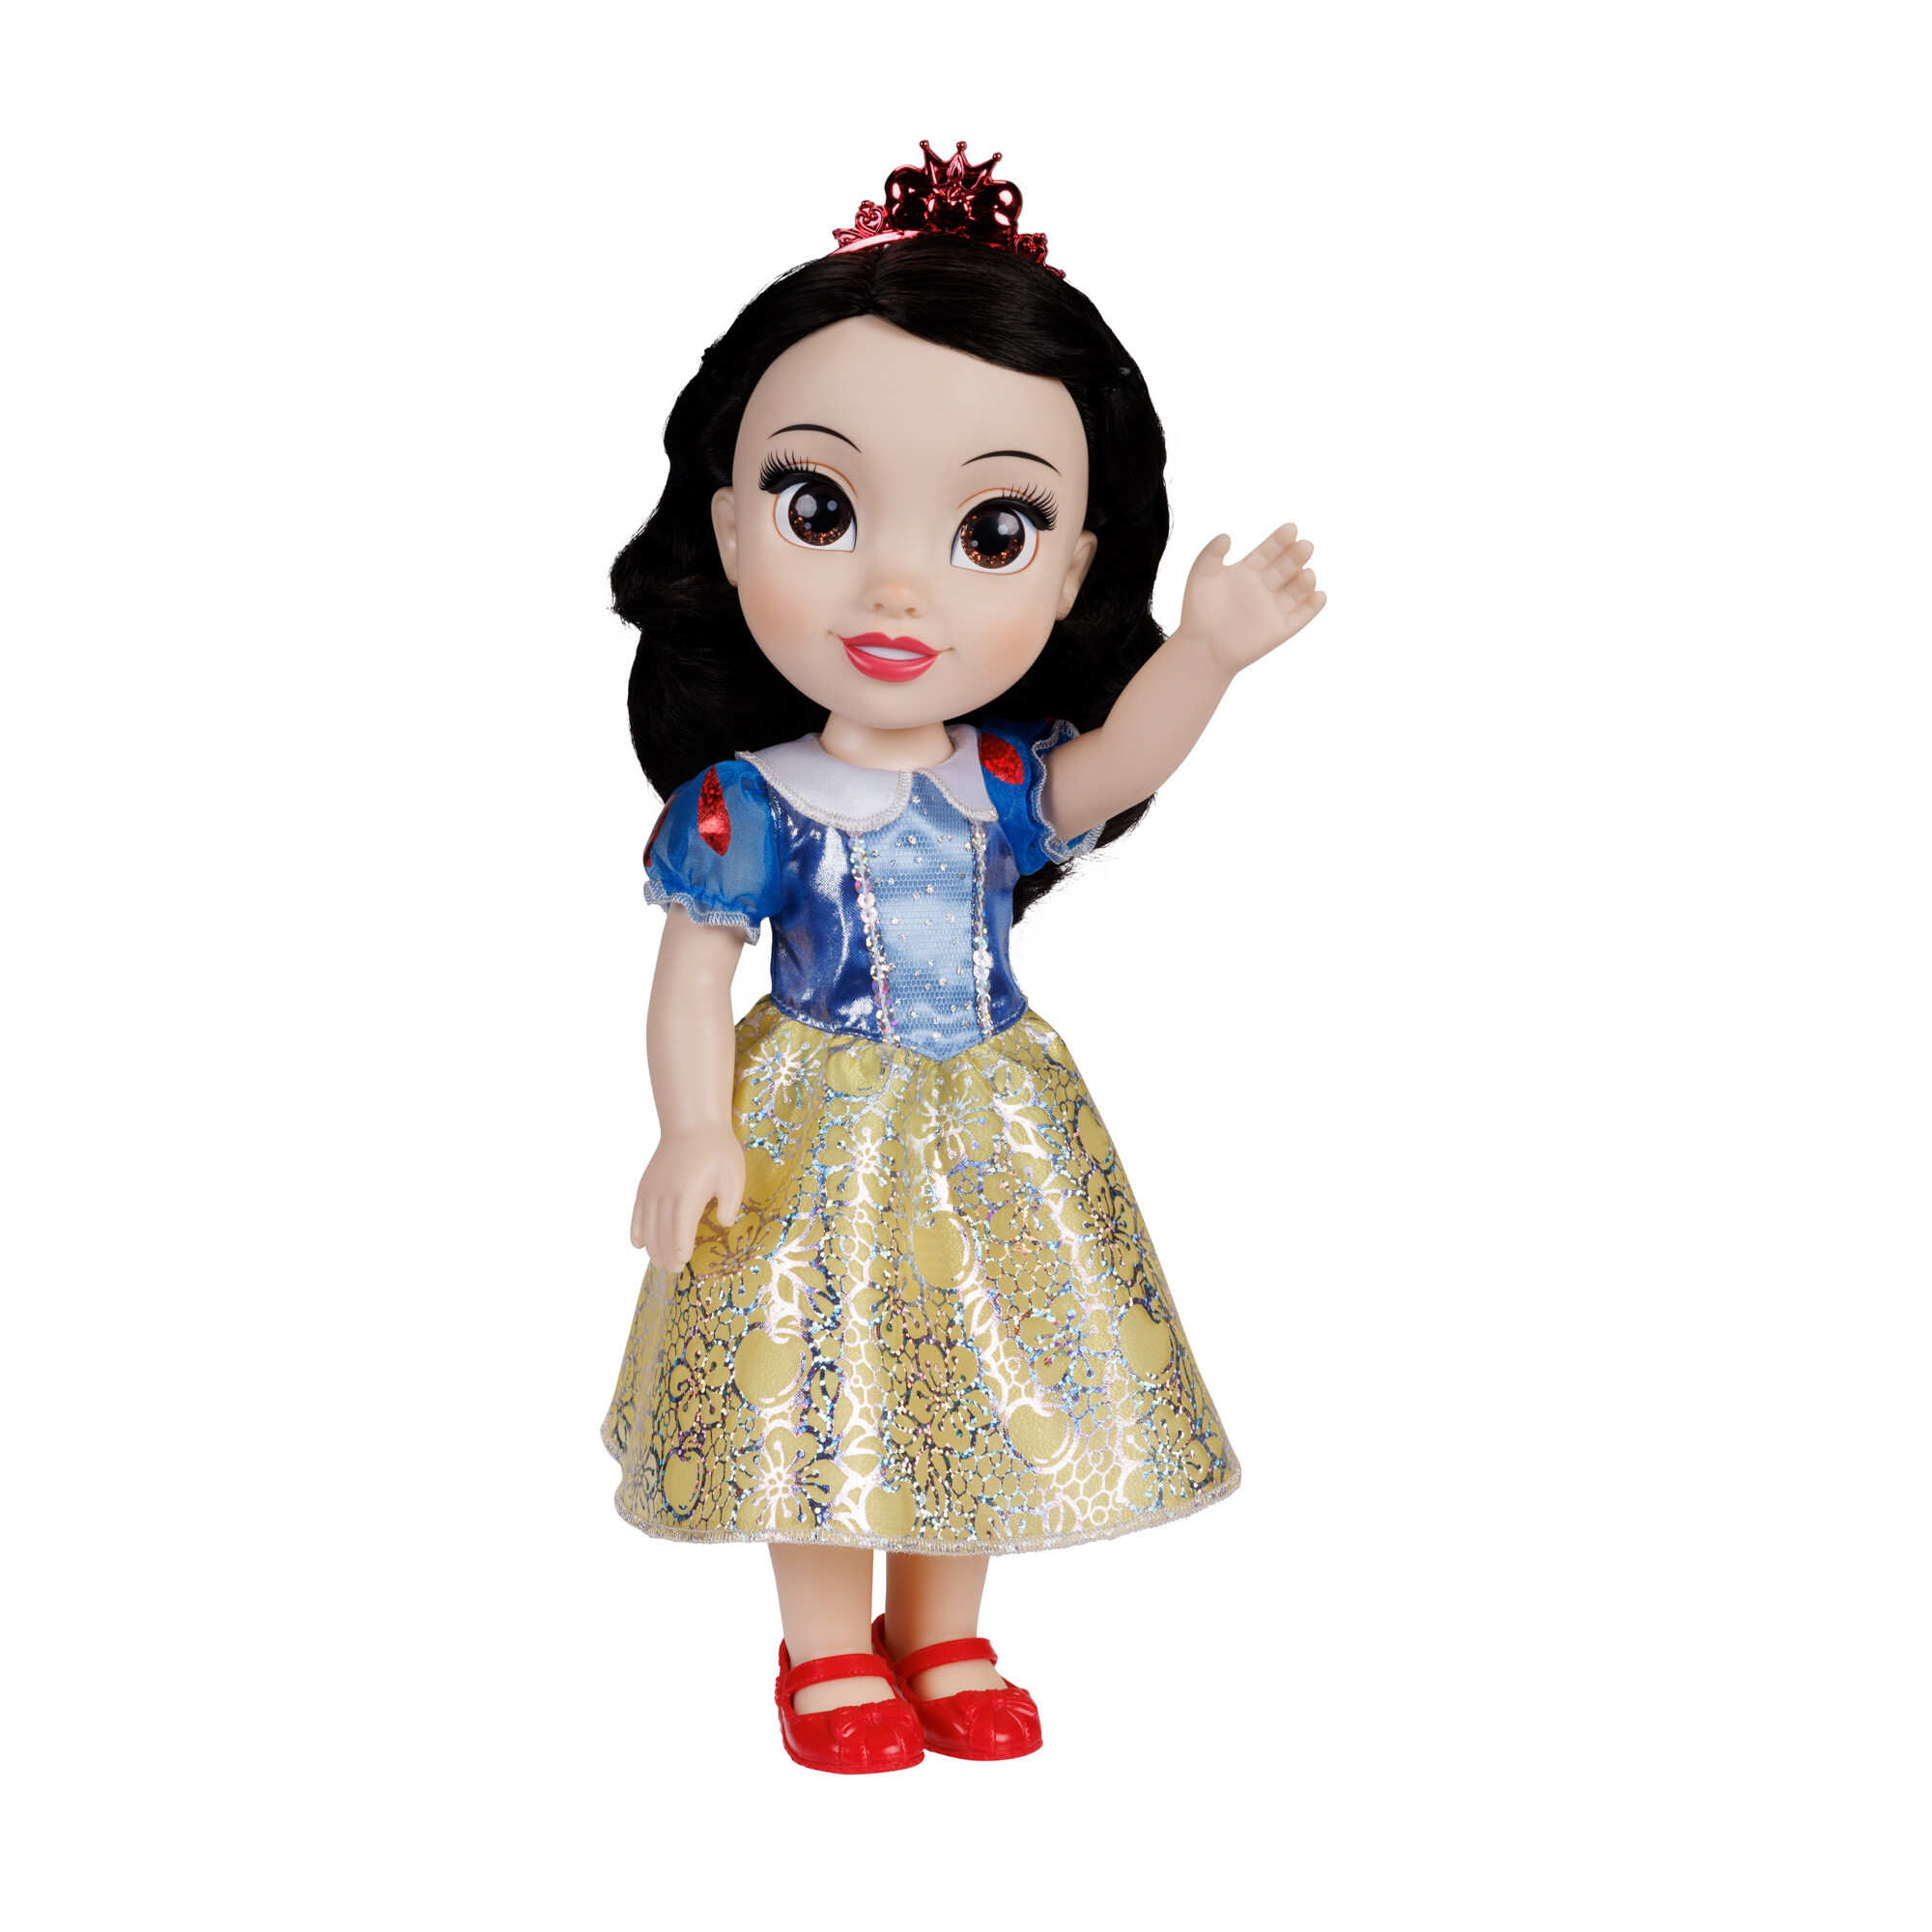 Disney princess bambola da 38 cm di biancaneve con occhi scintillanti! - DISNEY PRINCESS